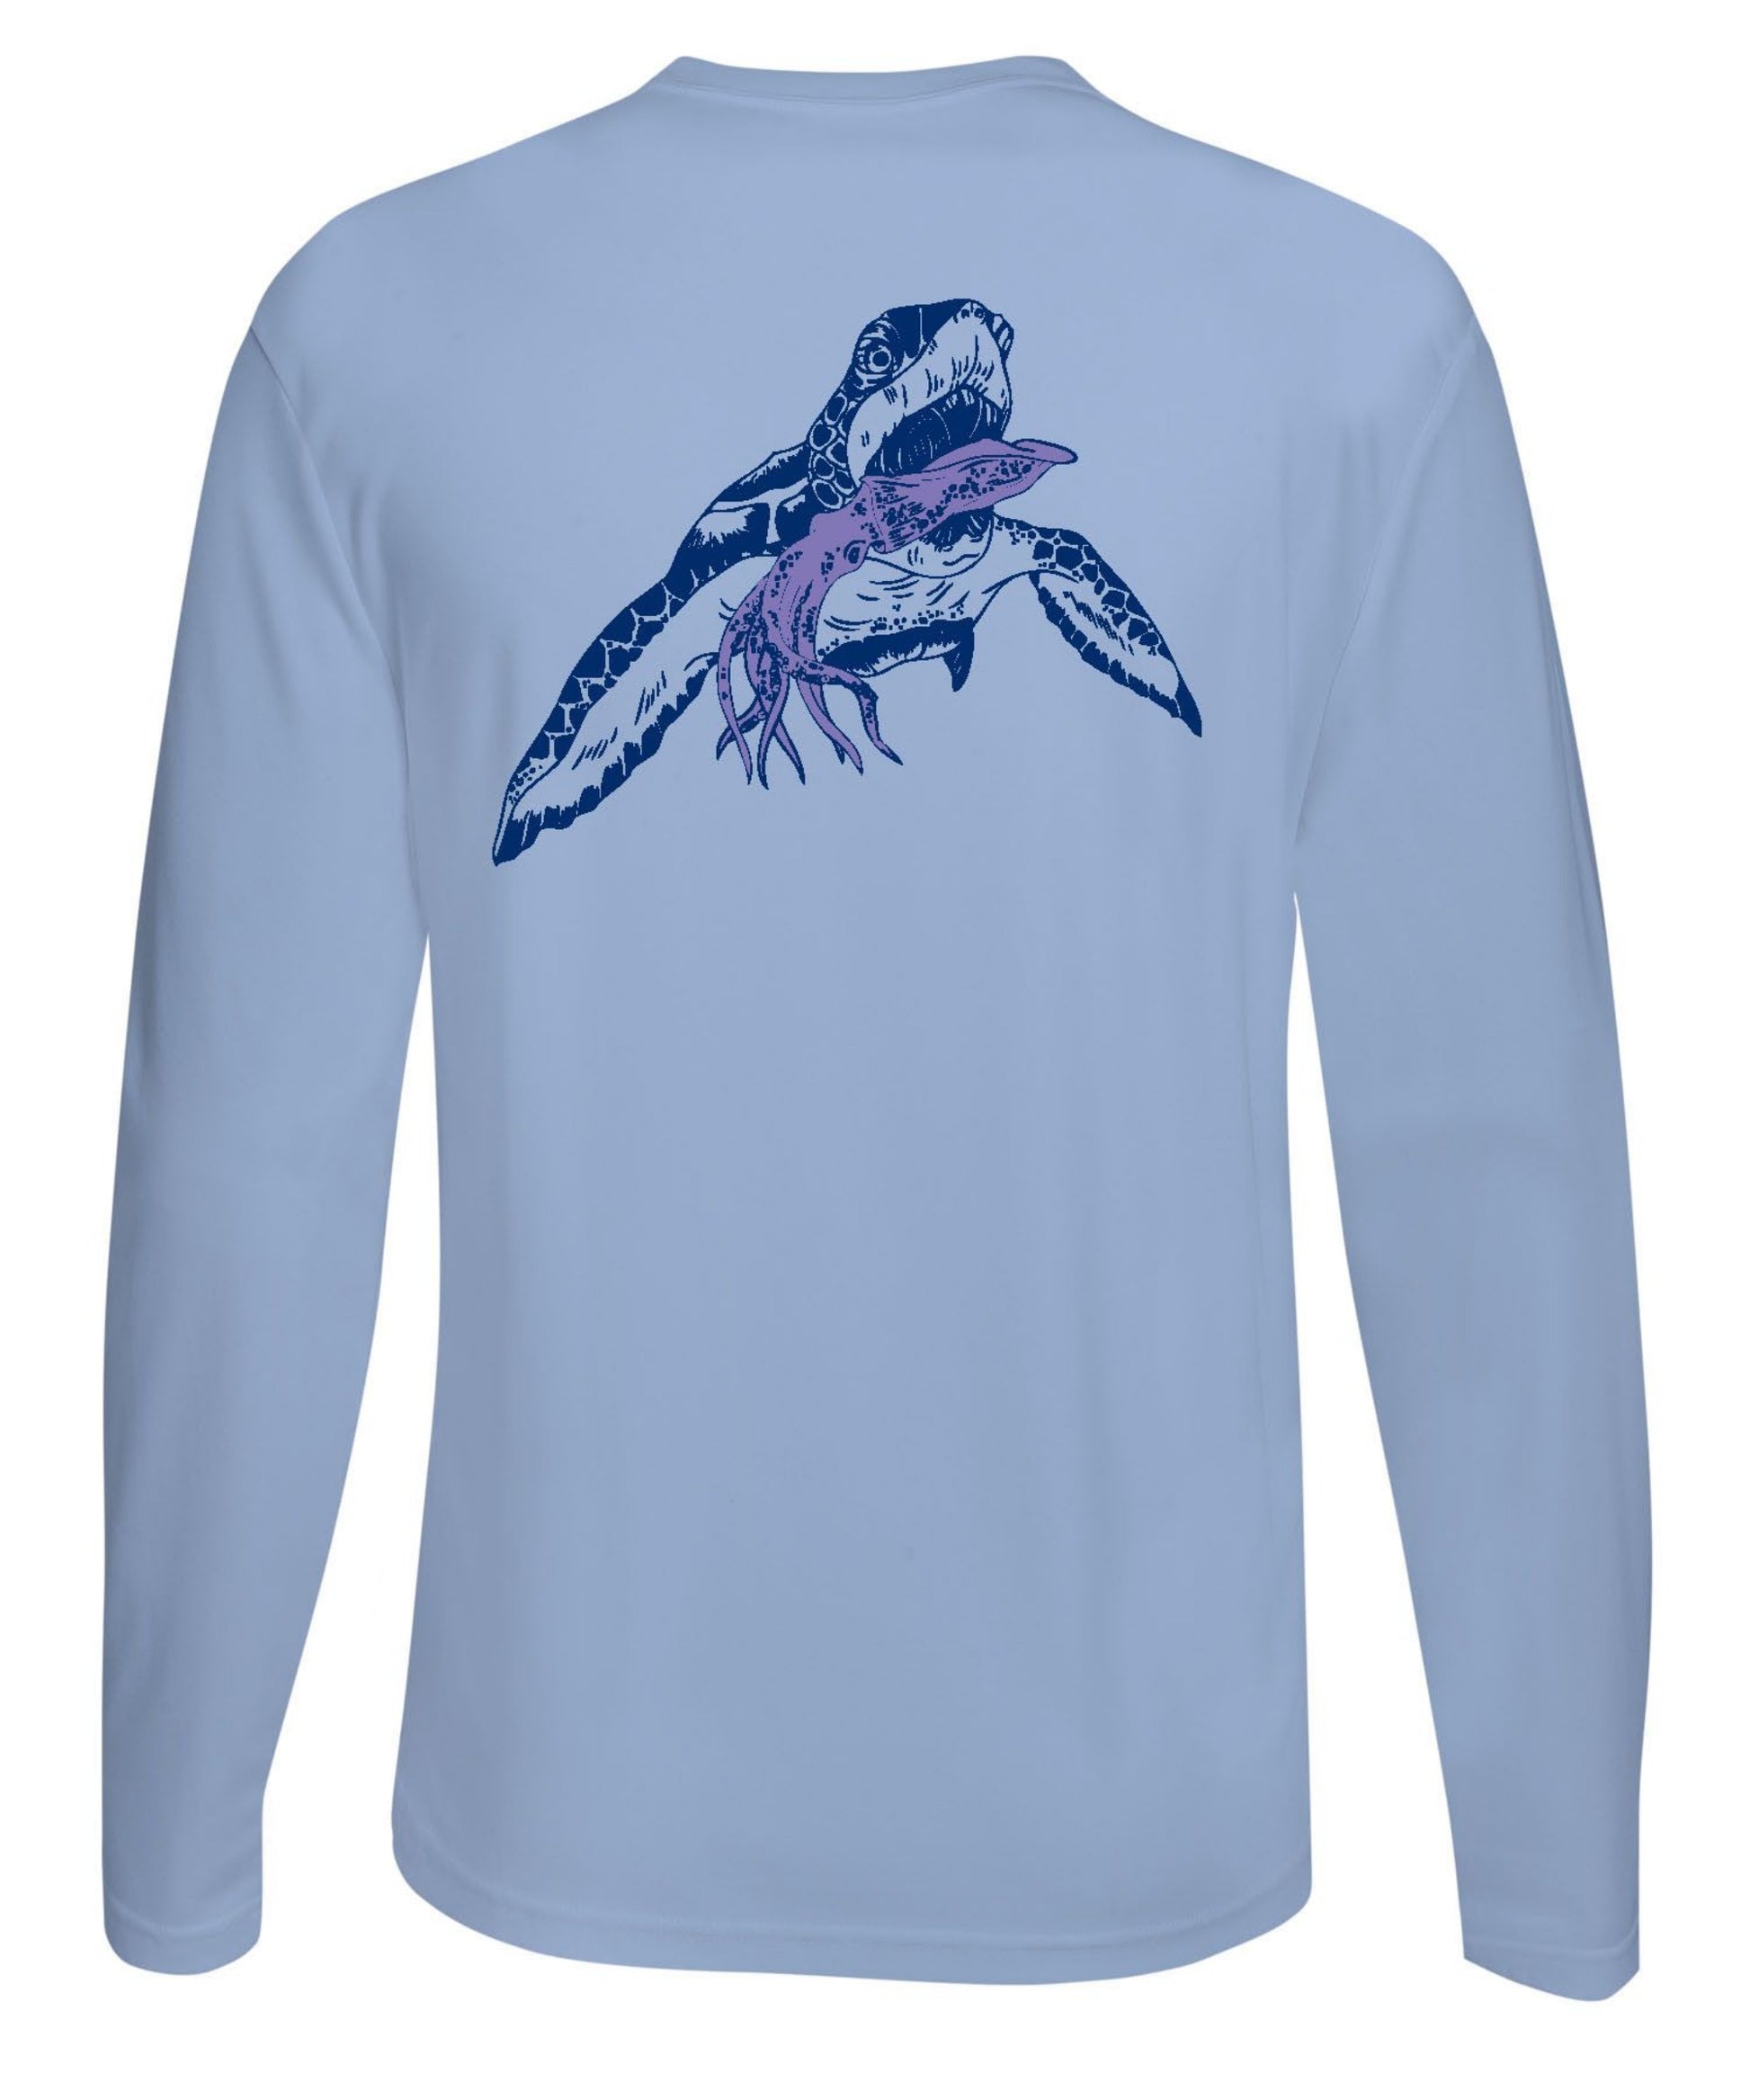 Turtle Performance Dry-Fit Fishing 50+uv Shirt -Reel Fishy Apparel XL / Lt. Blue L/S - unisex